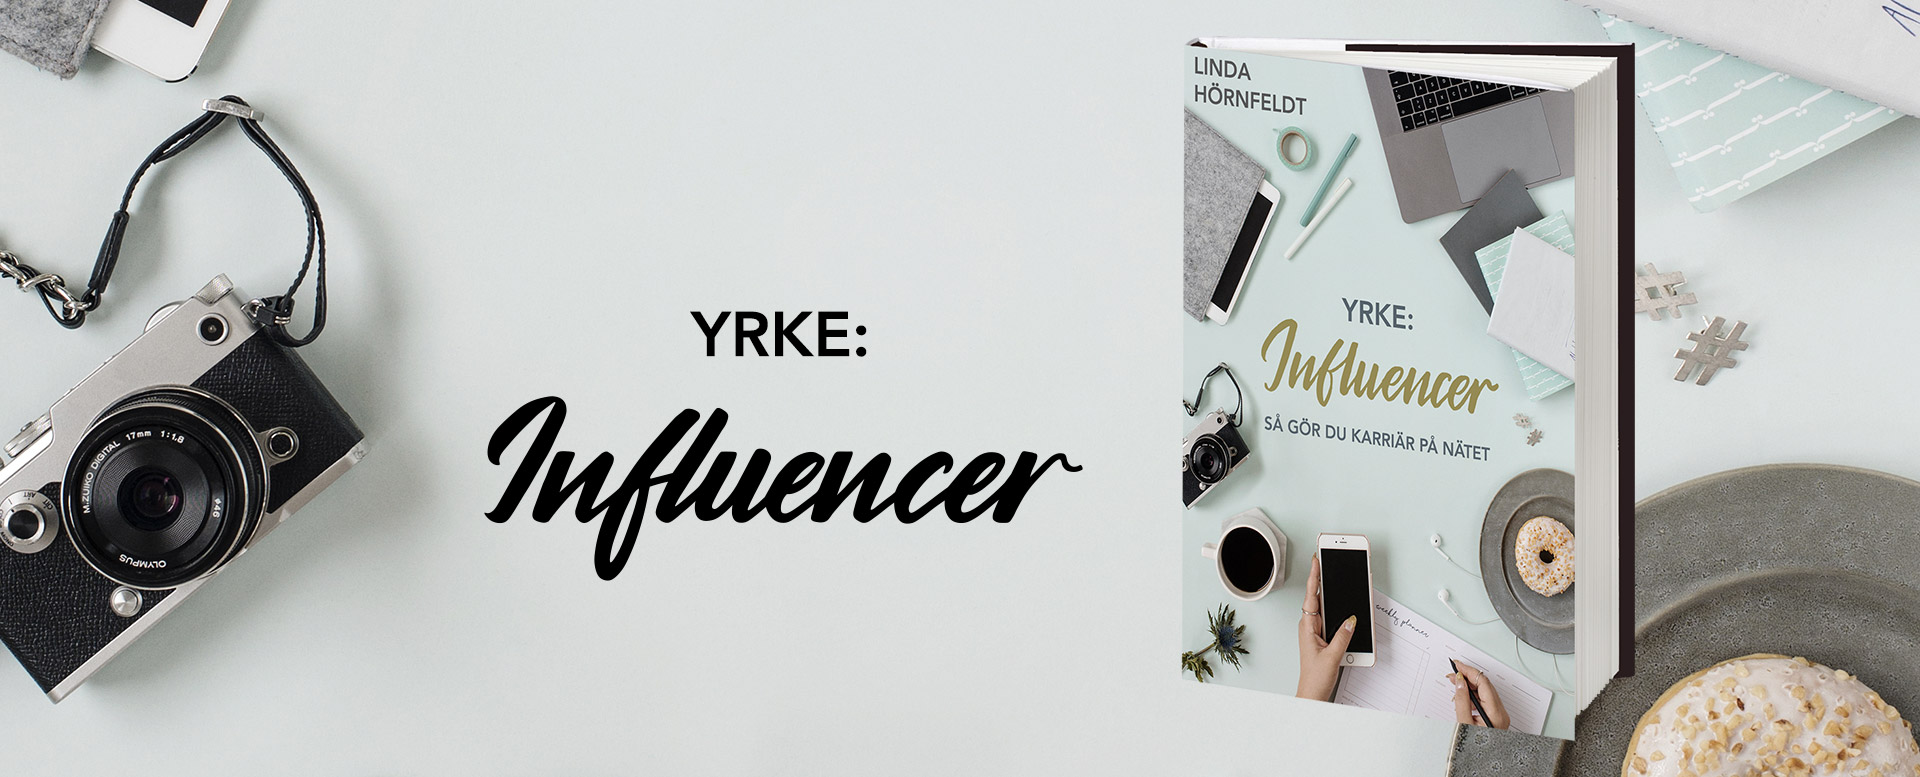 Yrke: Influencer